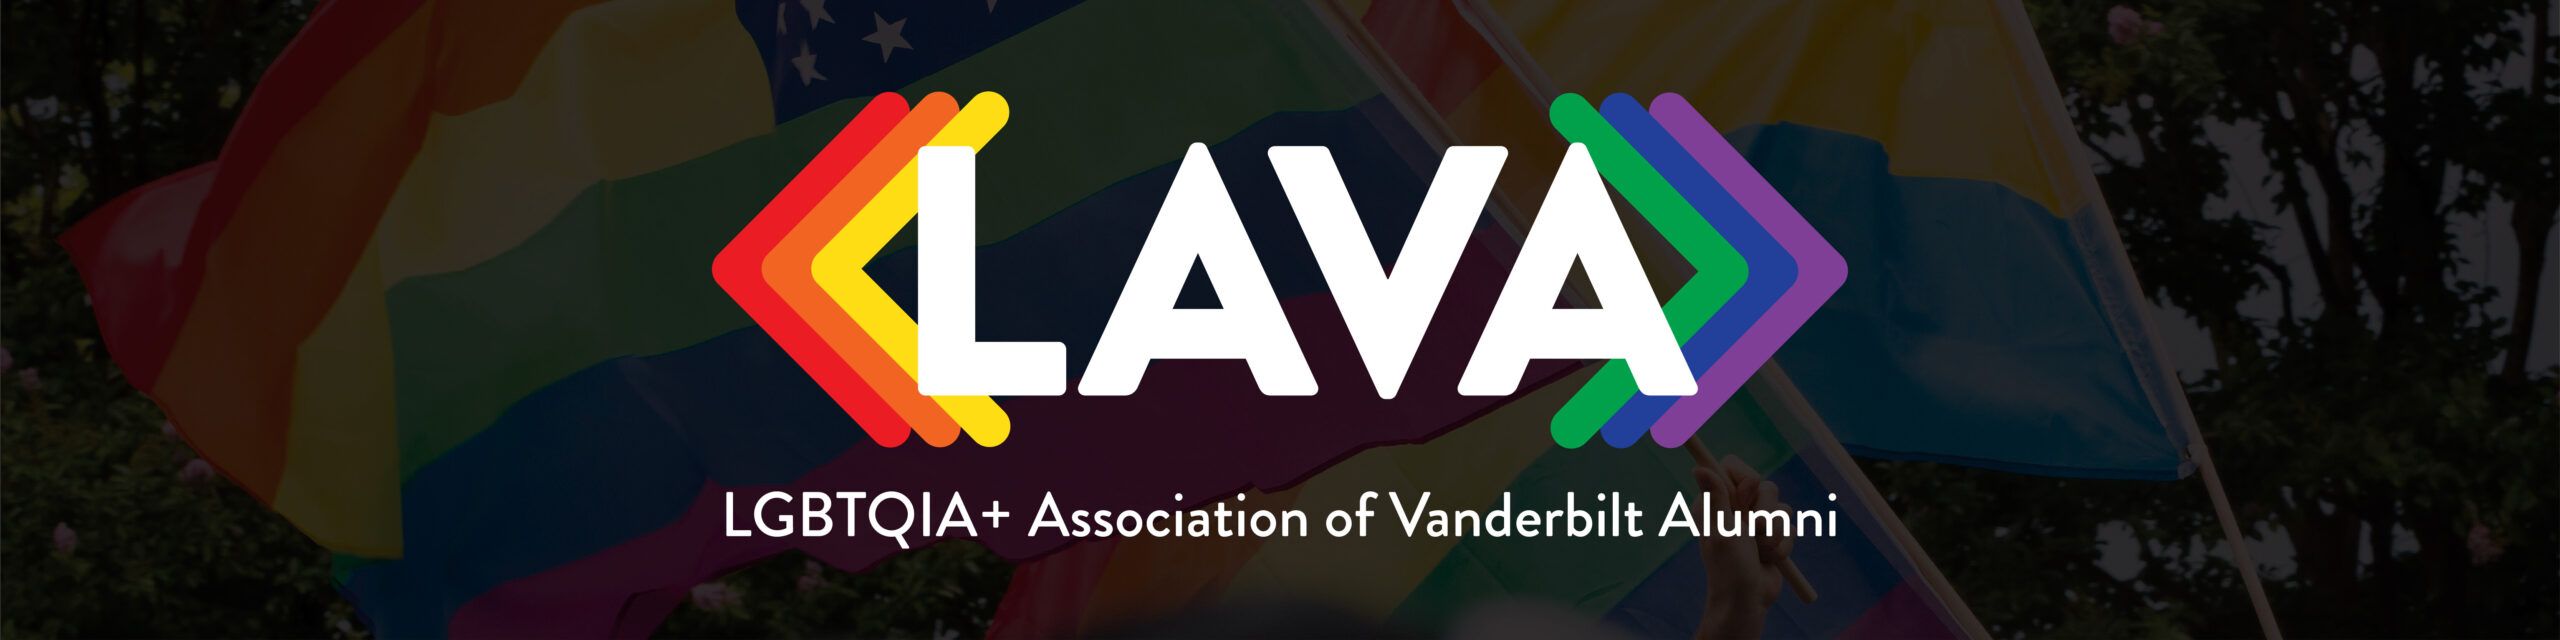 LGBTQIA+ Association of Vanderbilt Alumni (LAVA)